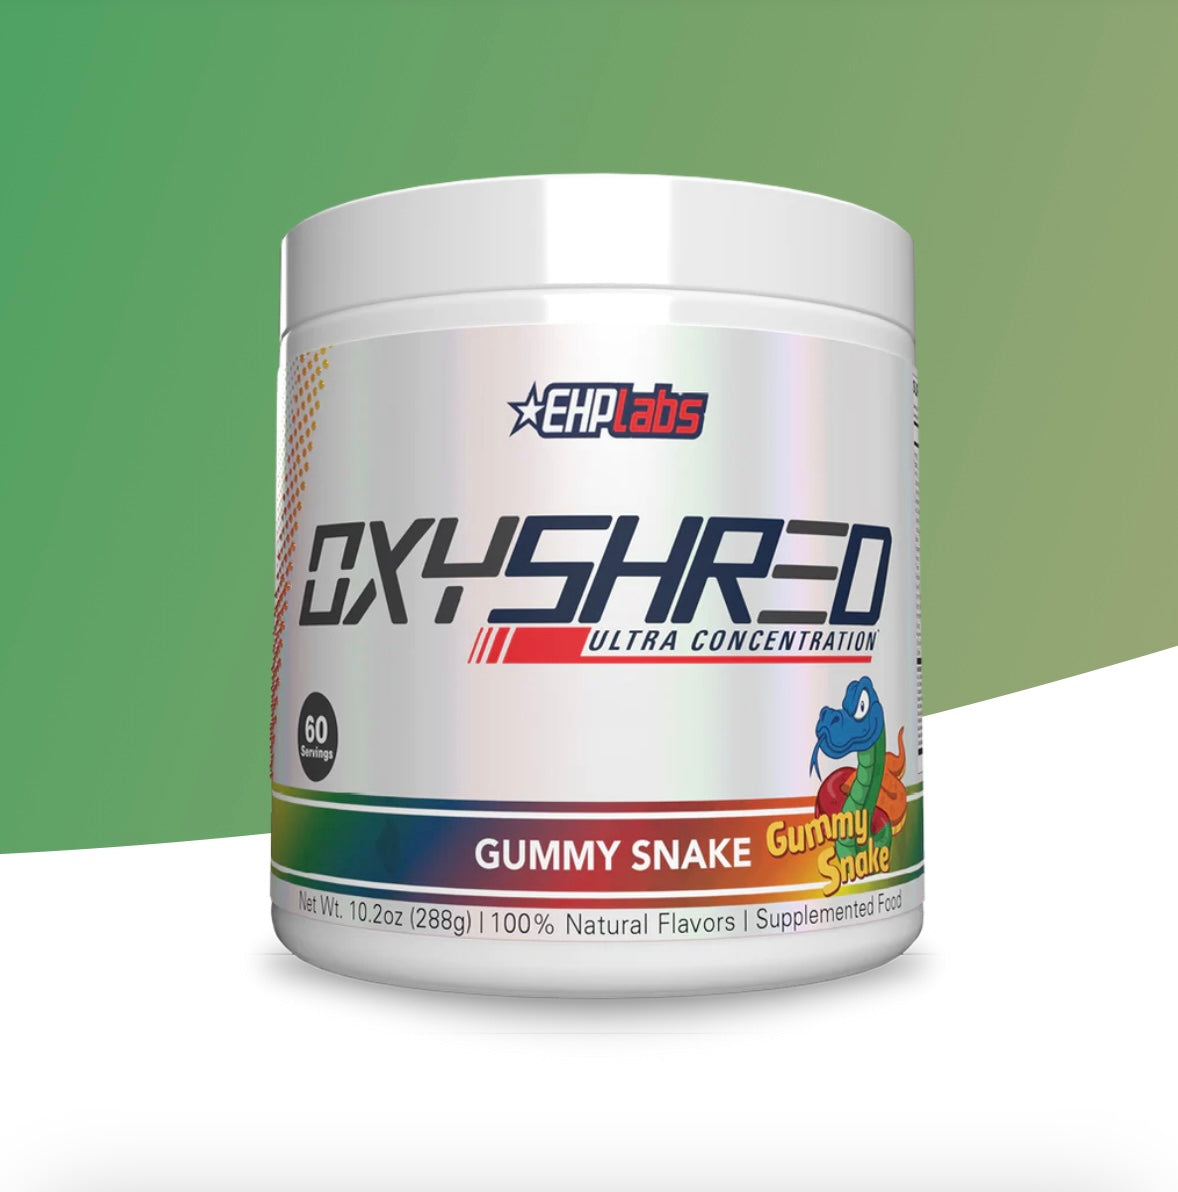 OxyShred Ultra Concentration - Gummy Snake